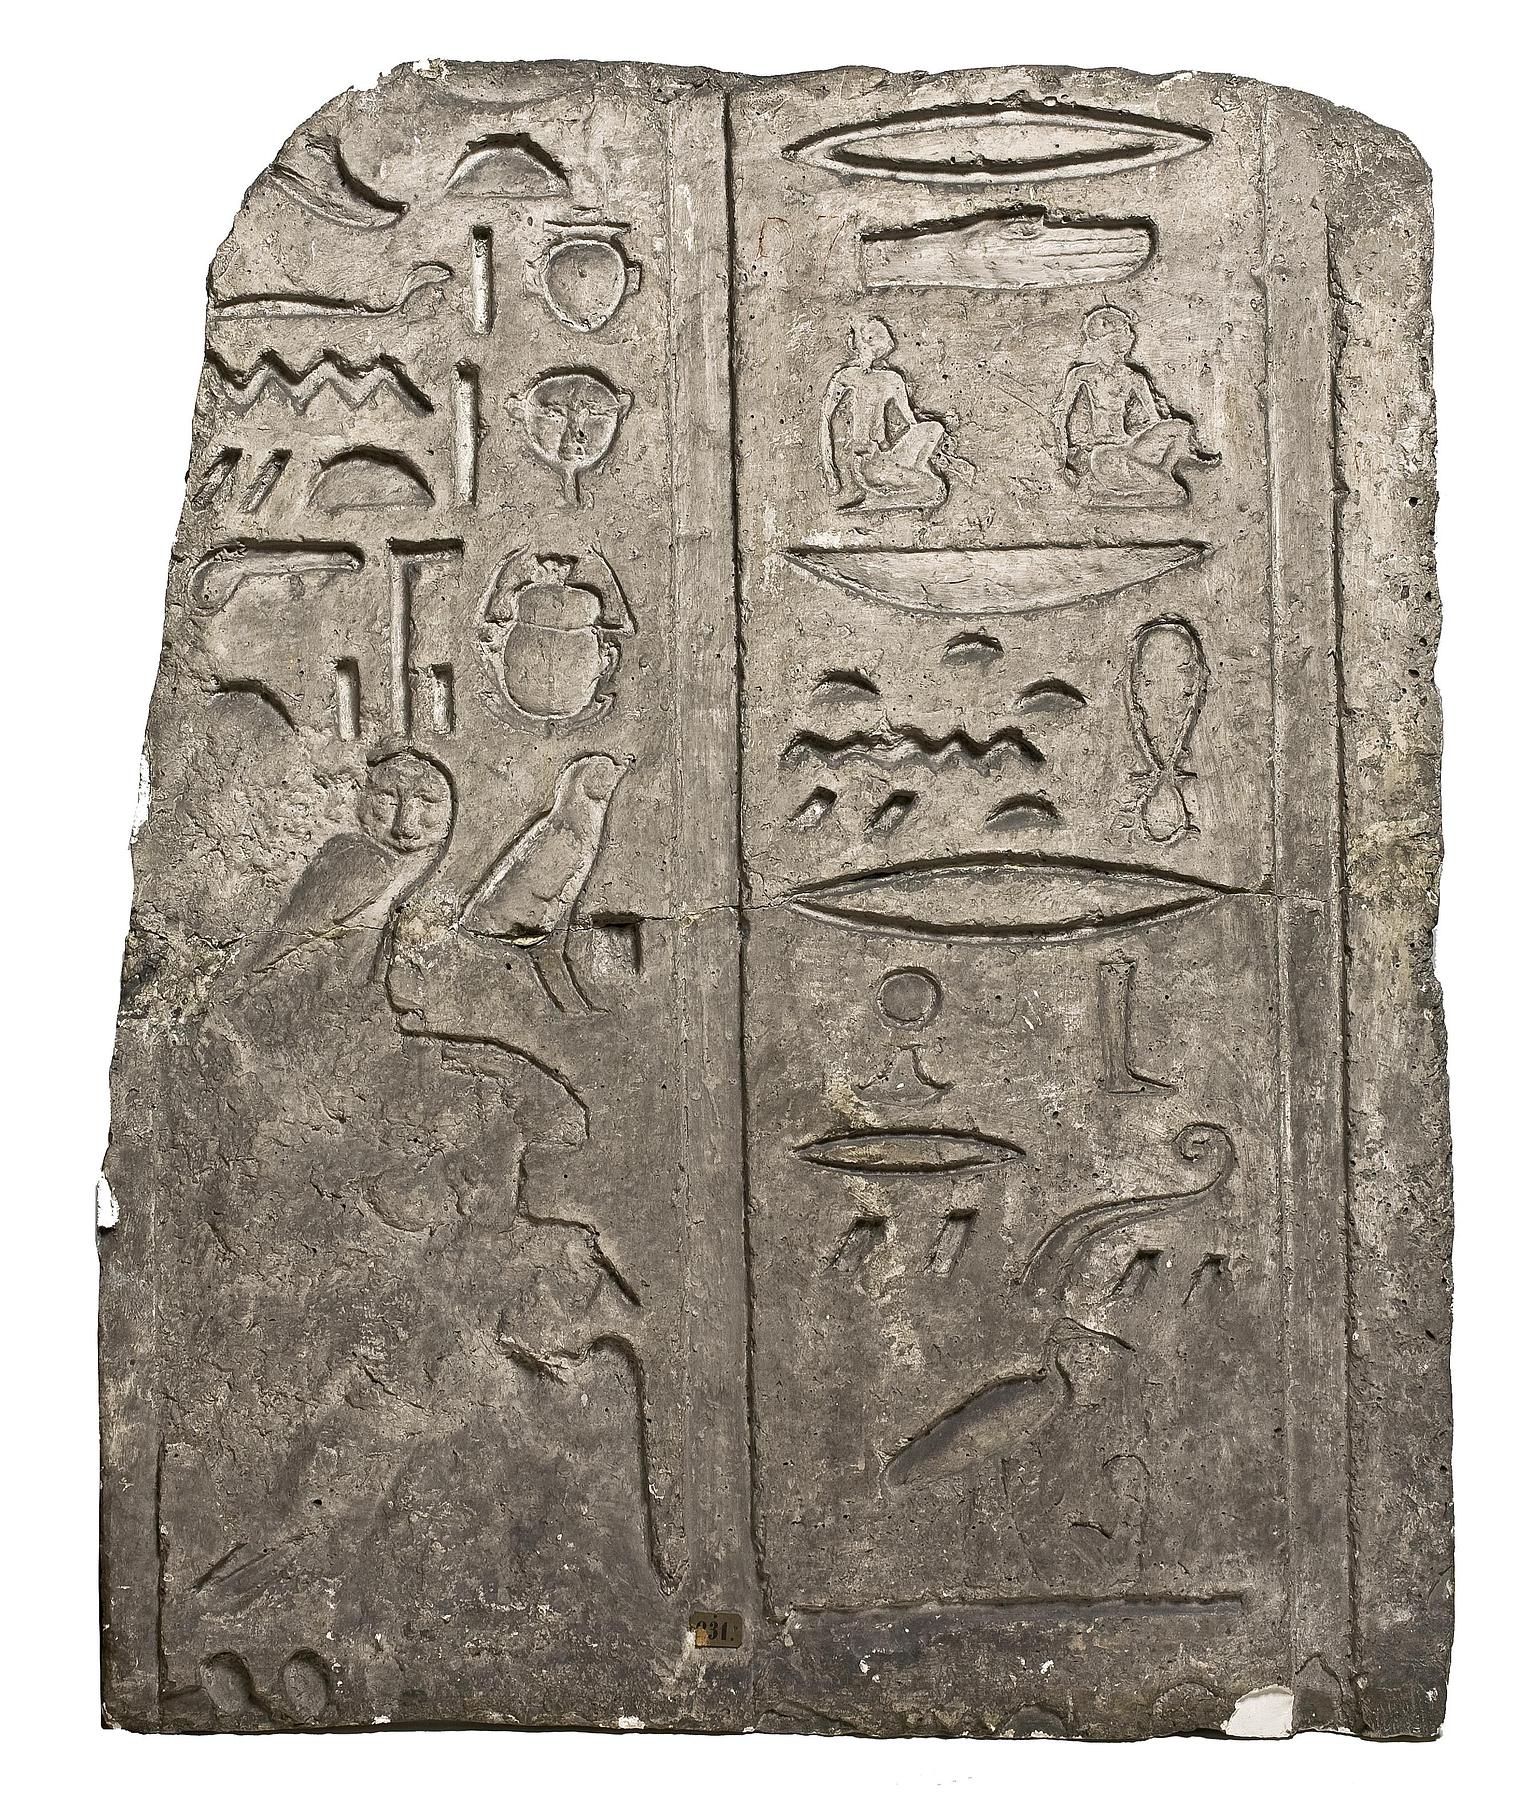 Hieroglyphic inscription, L231